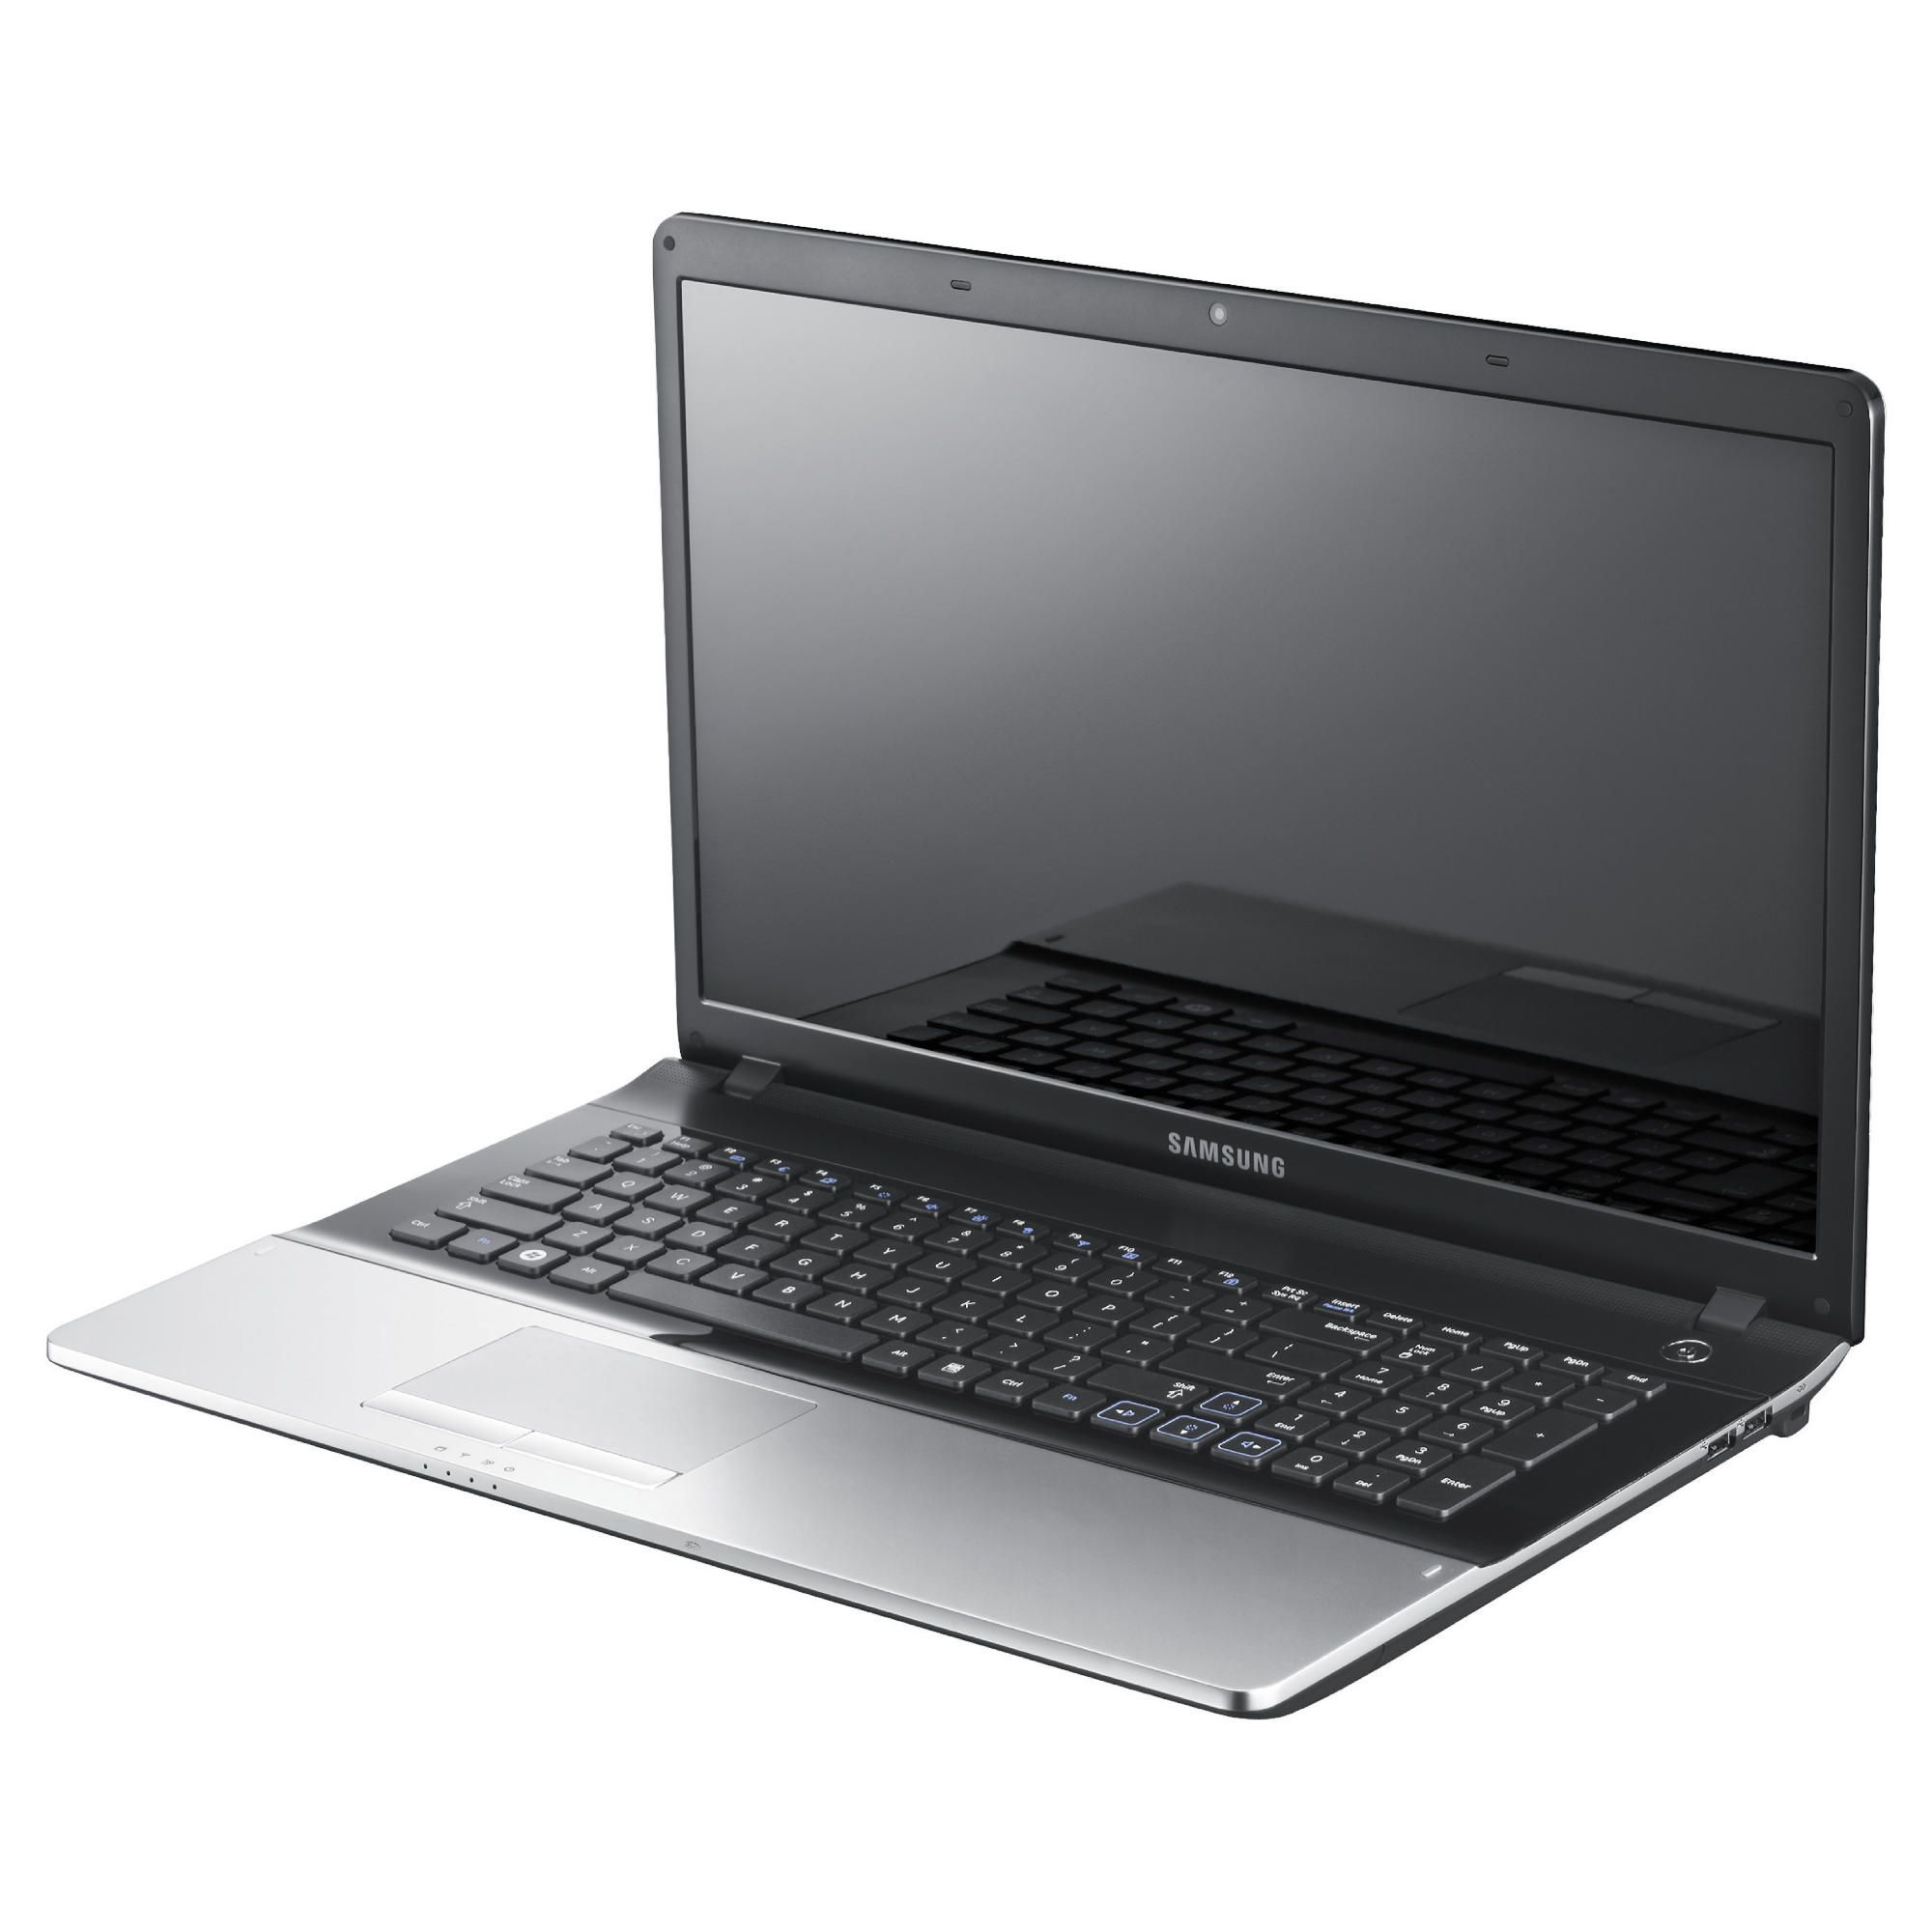 Samsung NP 300E 7A05UK Laptop (Intel Core i5, 4GB, 500GB, 17.3'' Display) at Tescos Direct